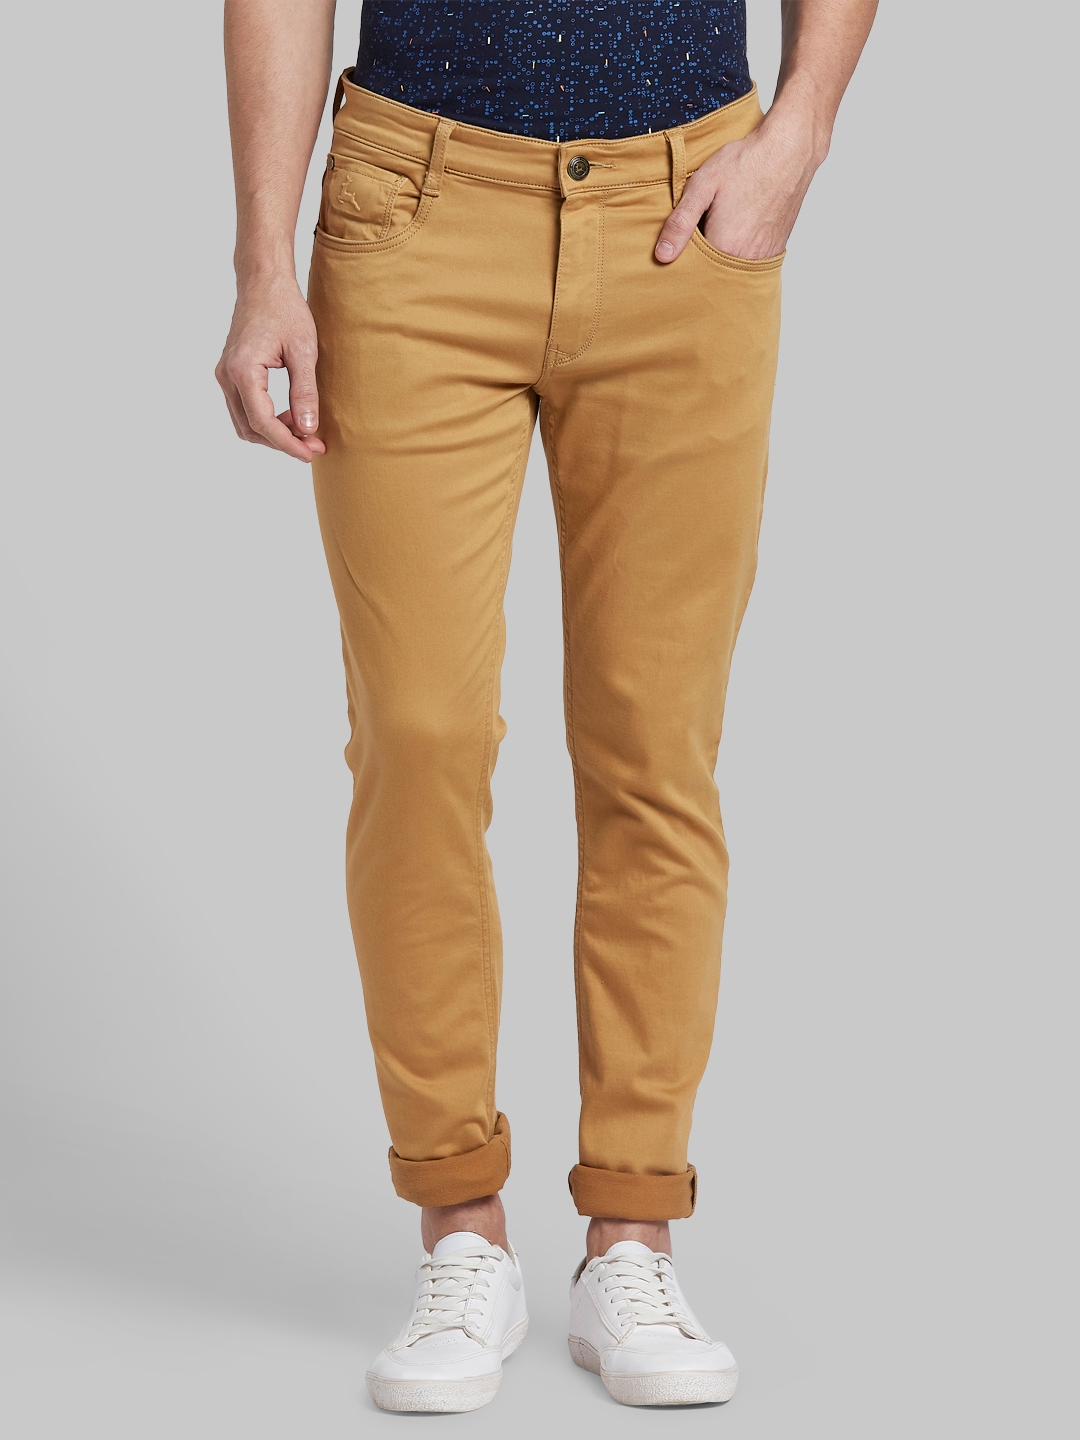 PARX | PARX Medium Khaki Jeans 0